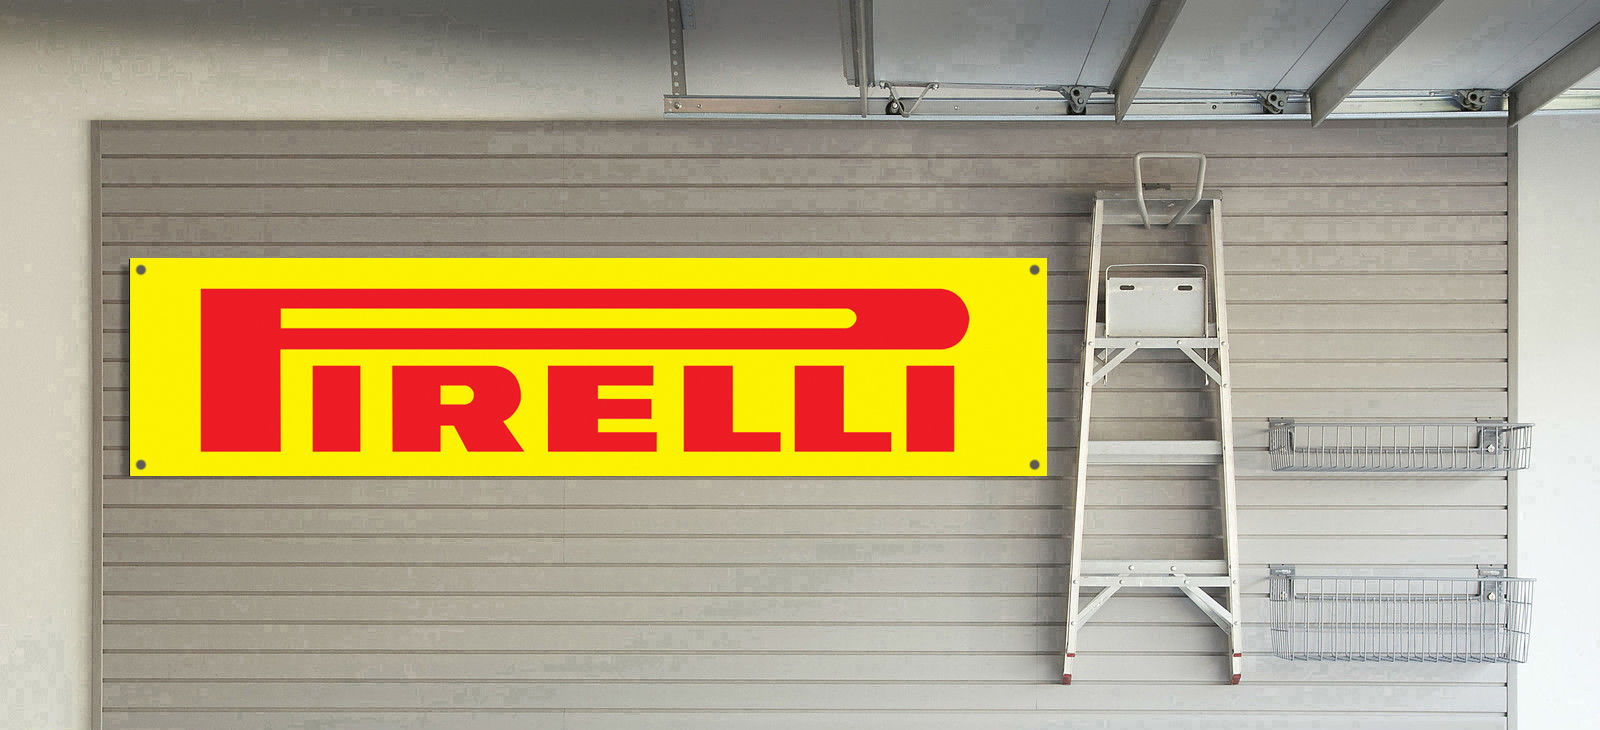 Pirelli Tyres Logo Banner Flag 2x8 ft Car Show Garage Wall Decor Sign 2021 NEW